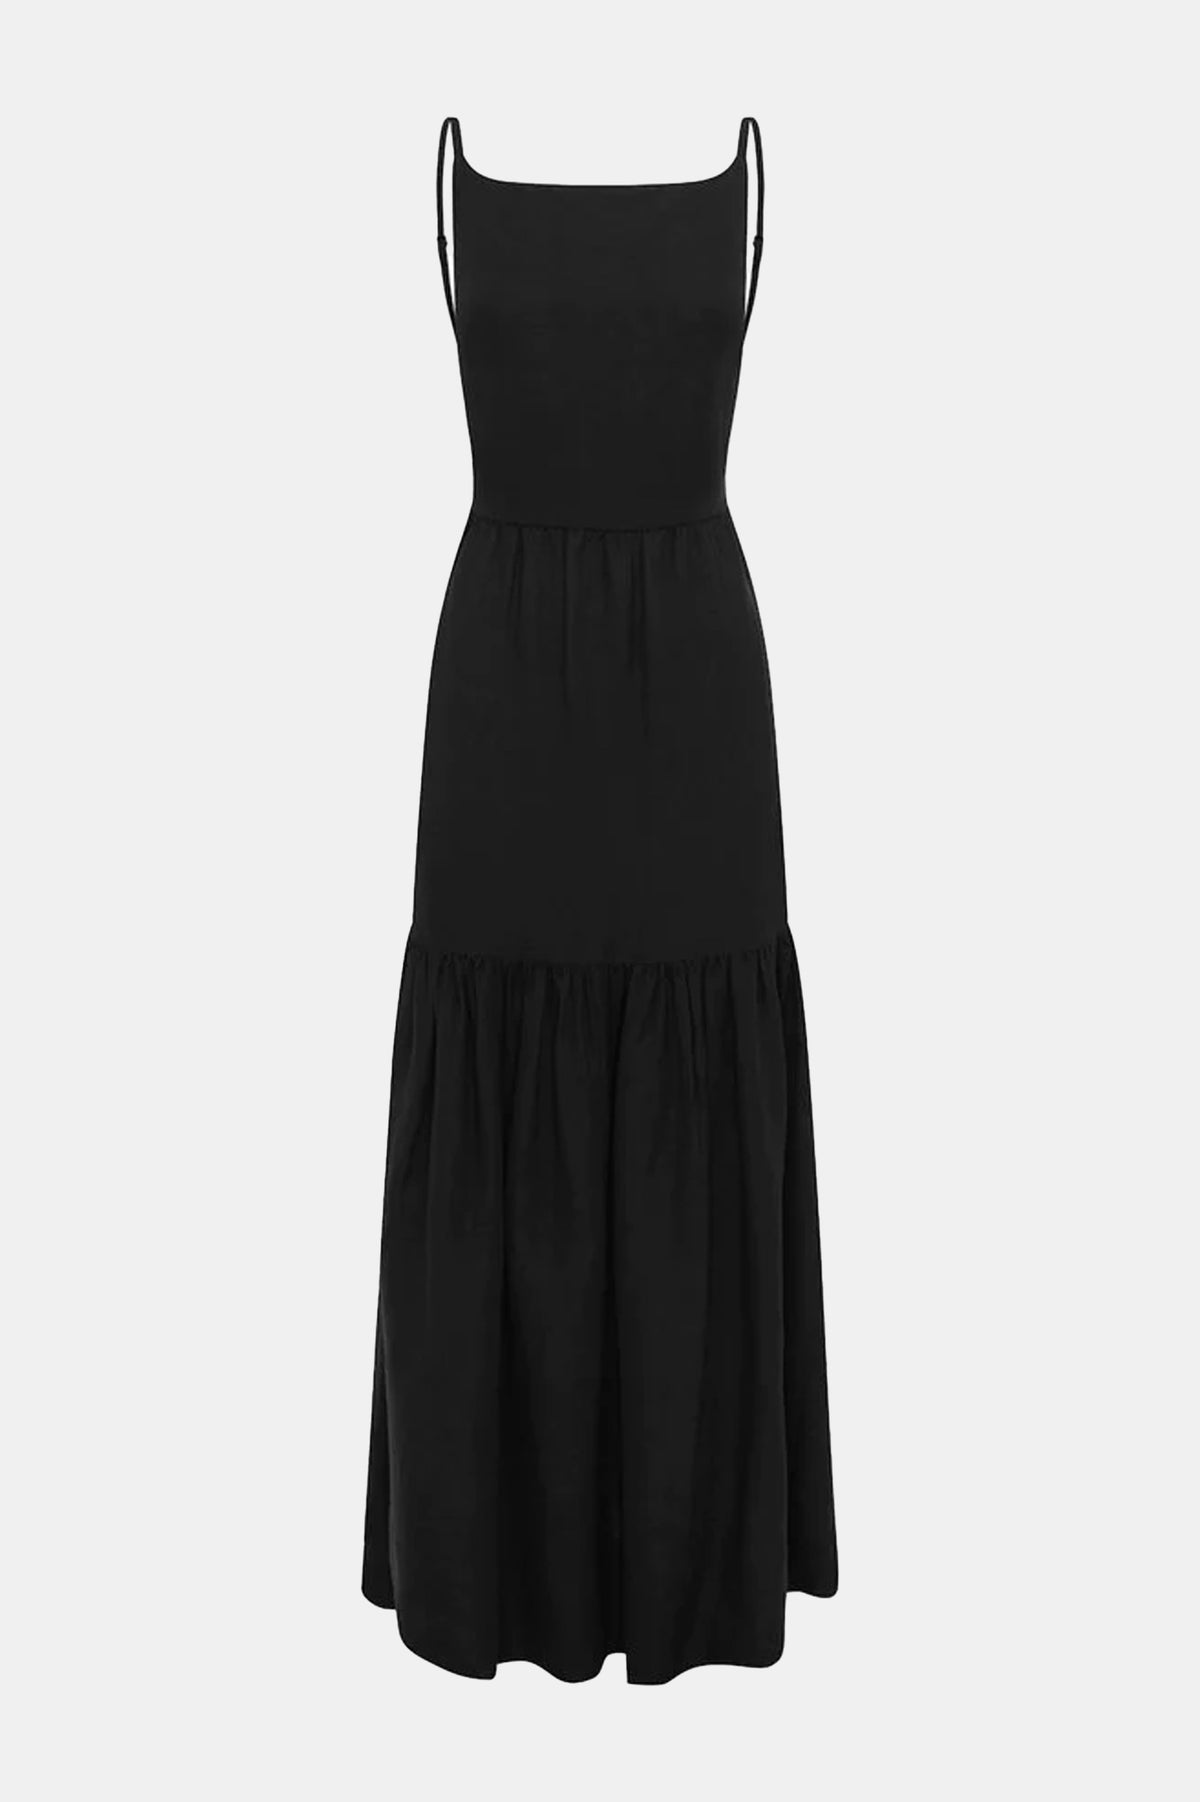 Elise Dress in Black